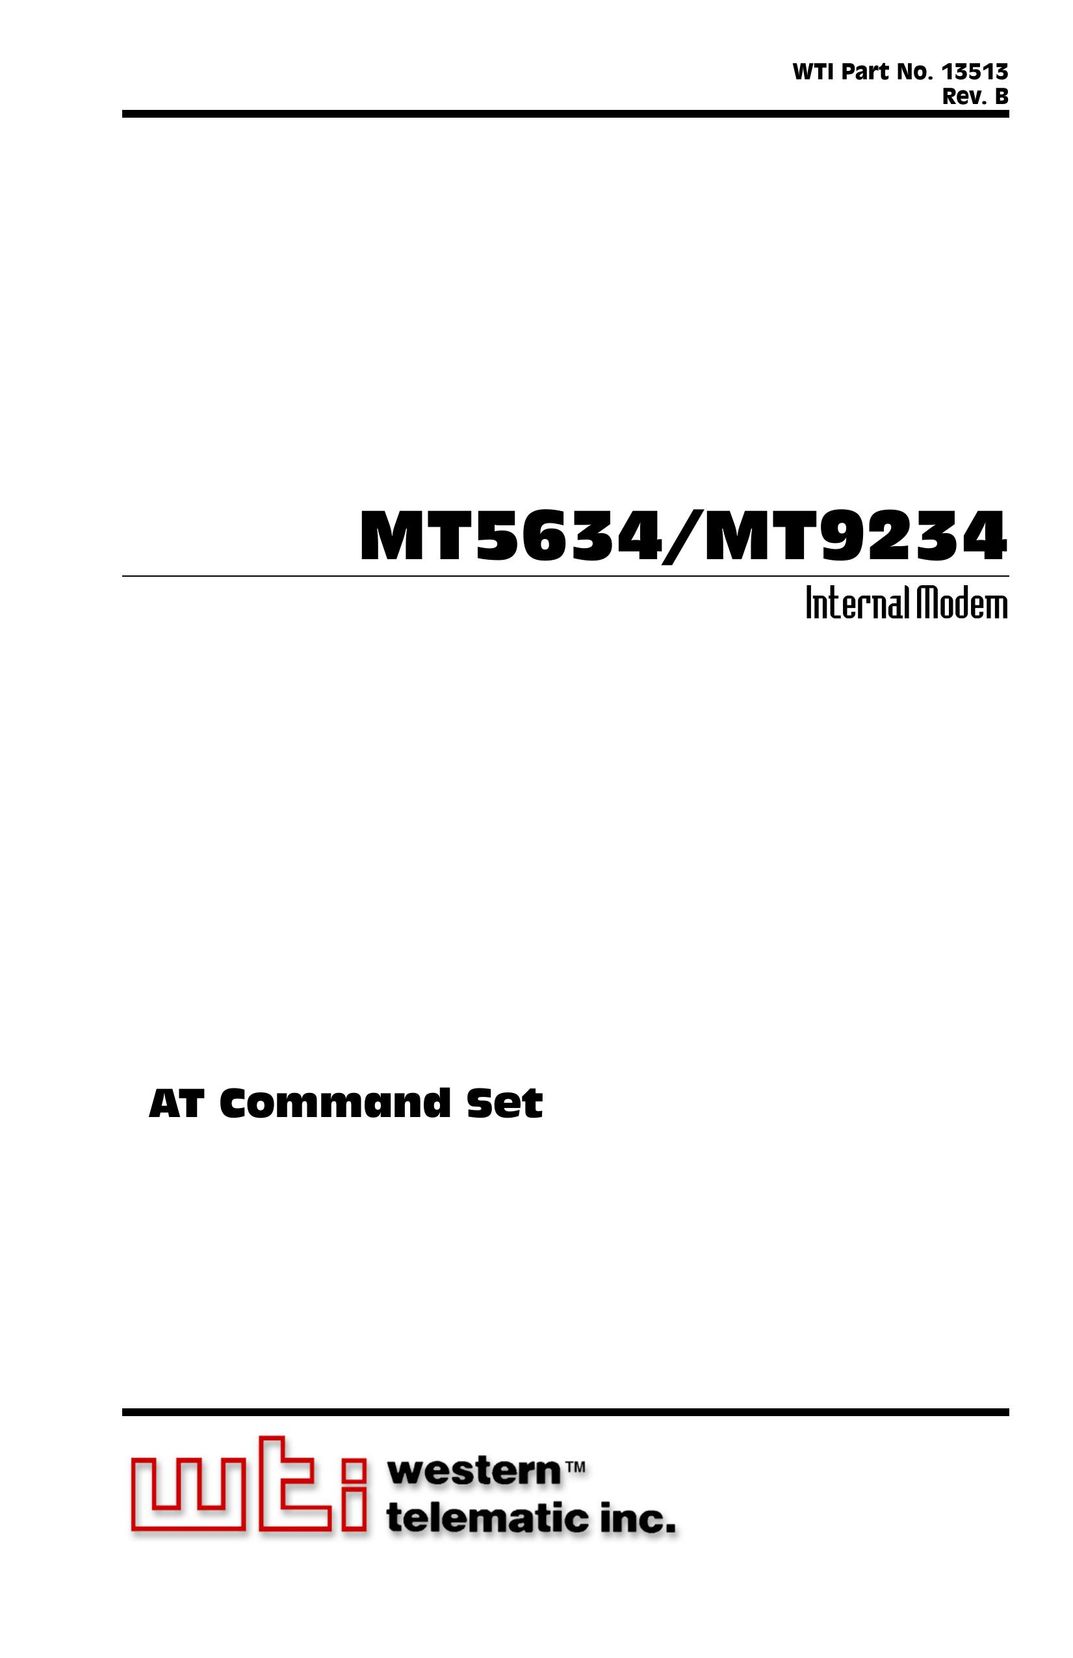 Western Telematic MT9234 Modem User Manual